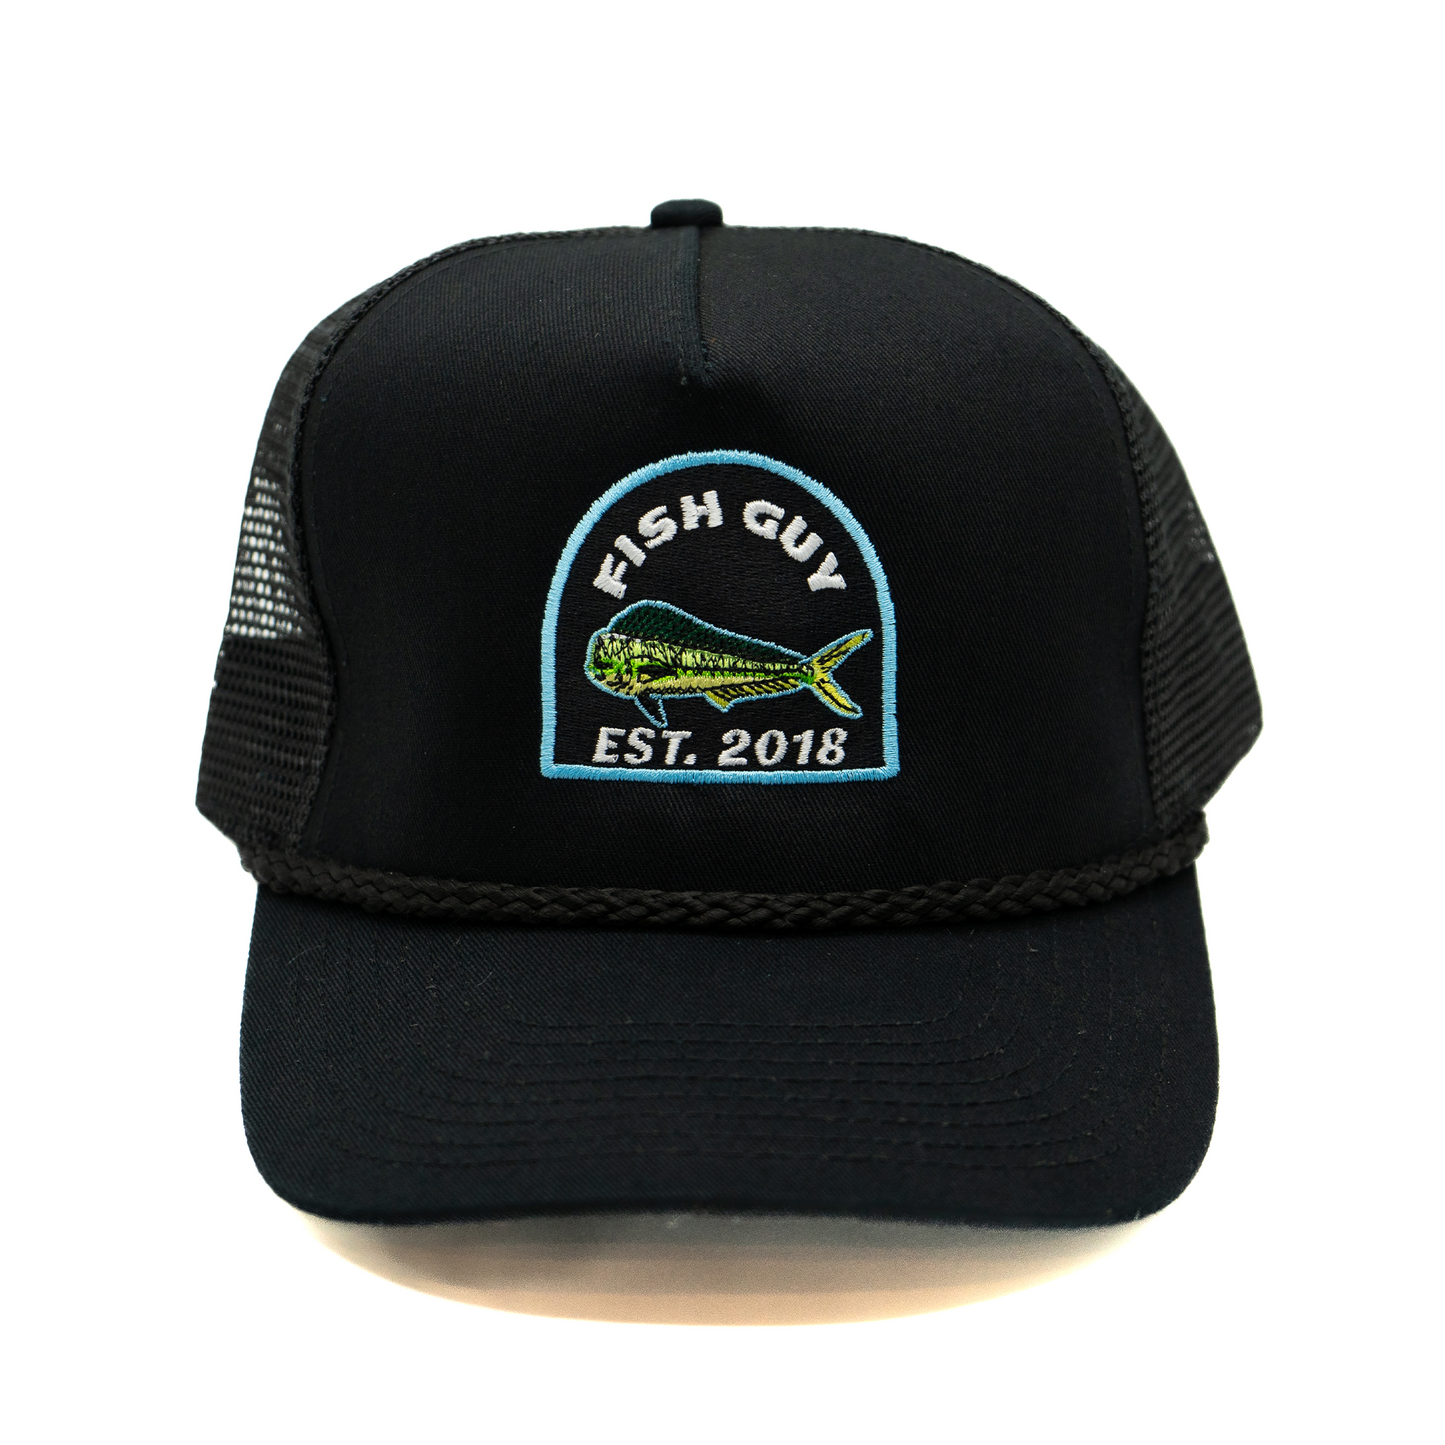 Mahi Guy Trucker Hat